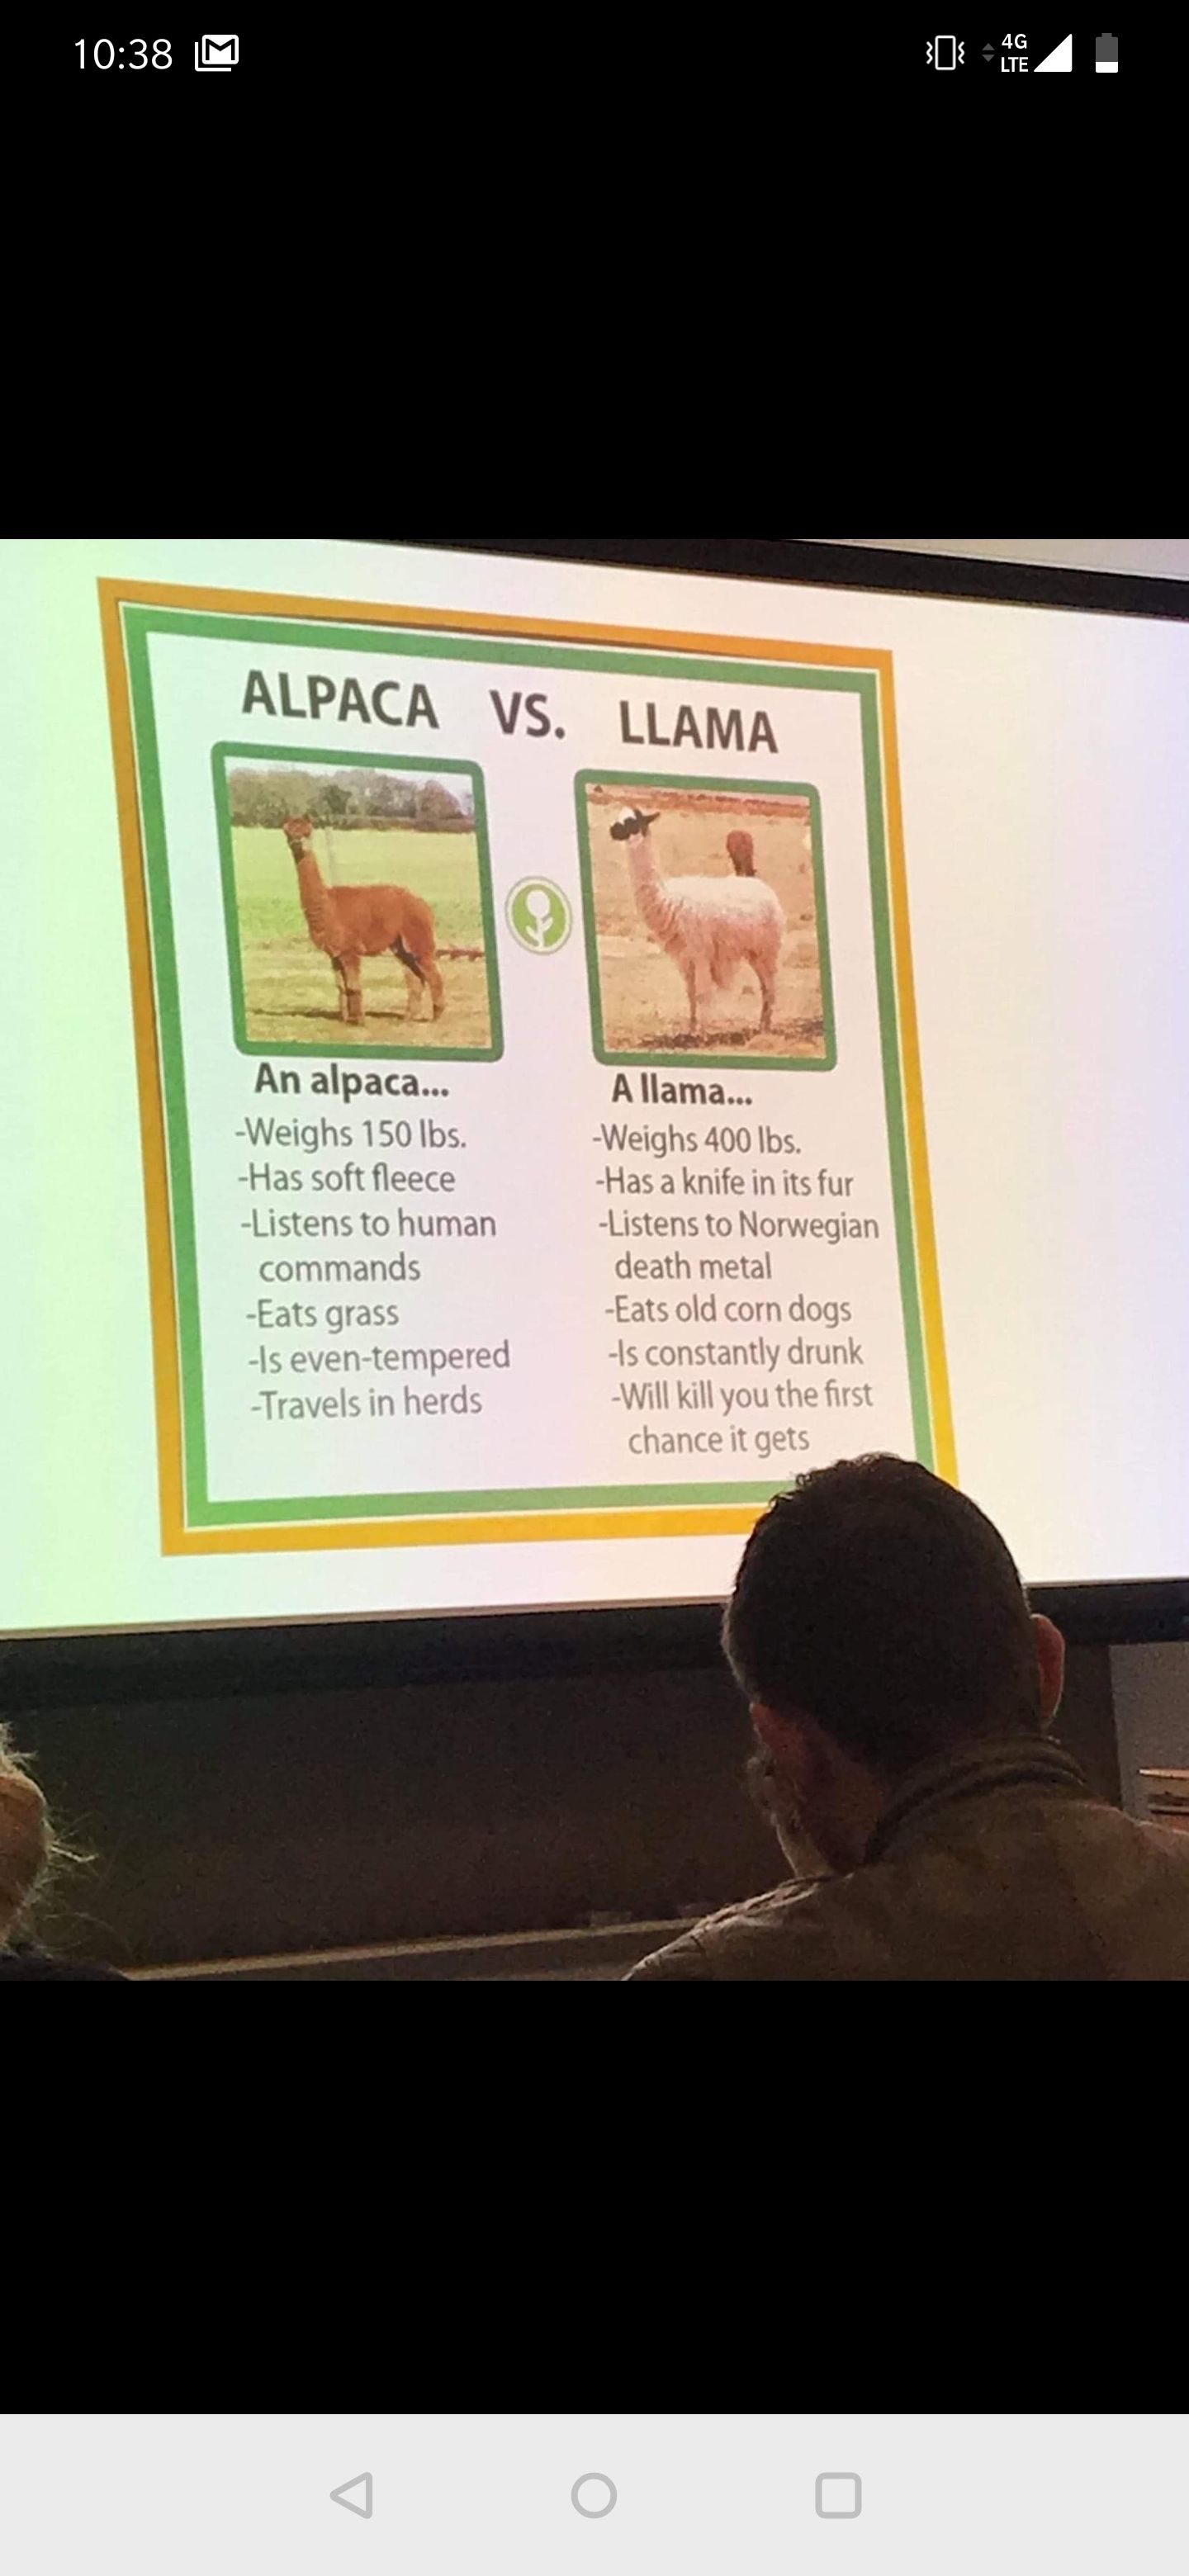 An alpaca has two llama legs.